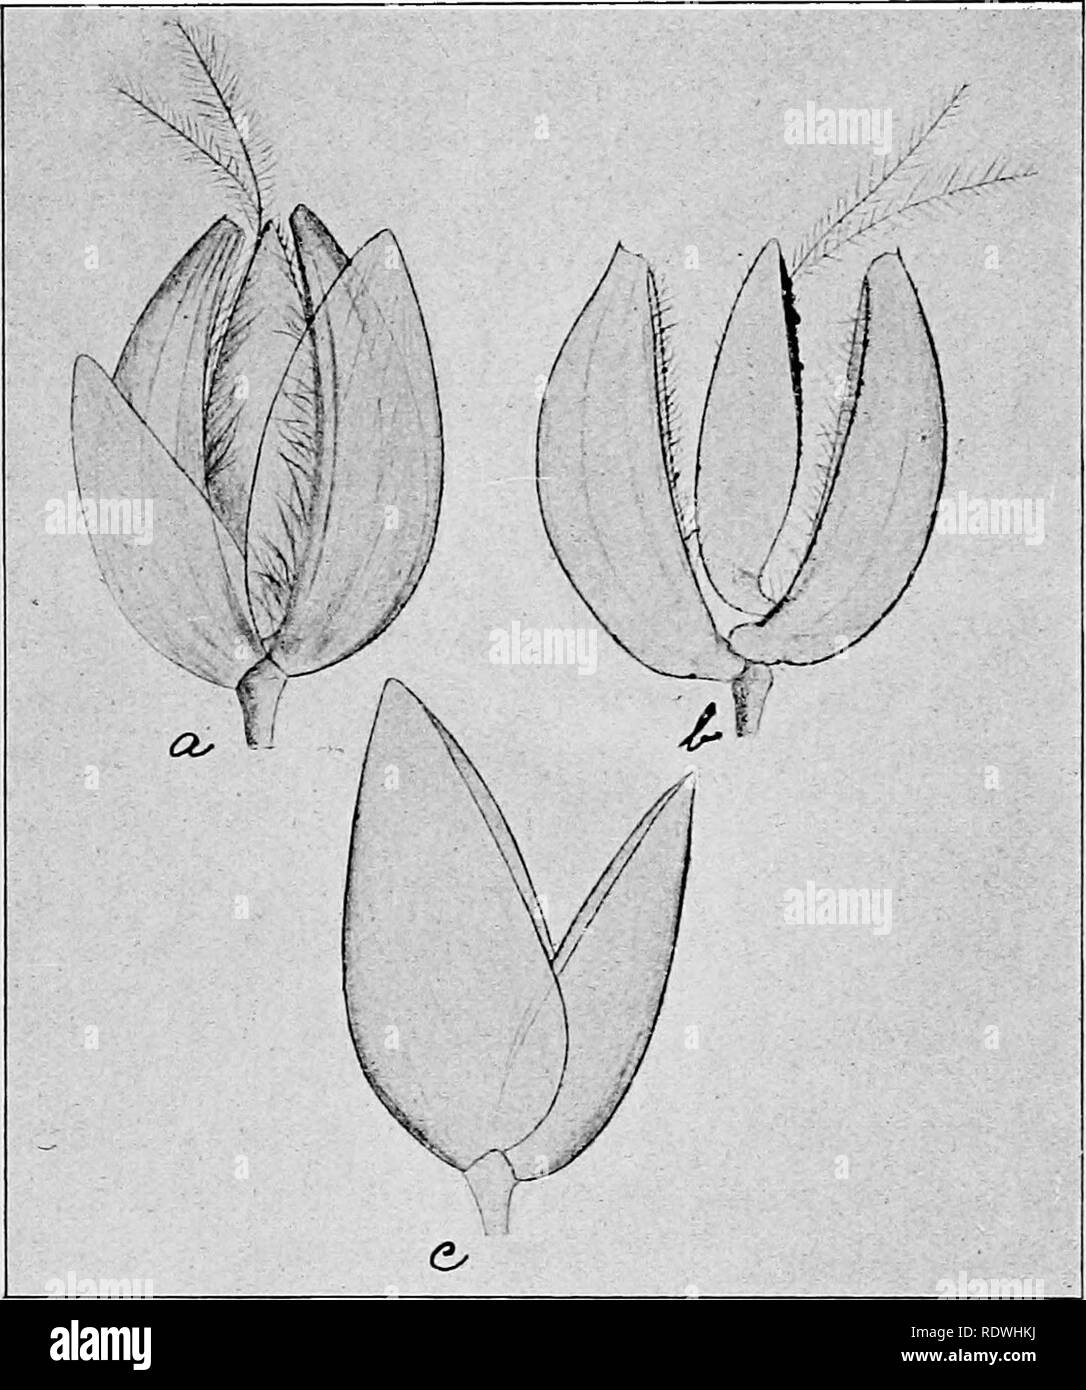 . The vegetation of the Siberian-Mongolian frontiers (the Sayansk region). Botany; Botany. Hierochloe odorata (L.) Wahlenb. Fl. Ups. (1820) p. 32; PoaceBrnxi., SjianH II-b'b $eA- lesKo, $ji. Asiax. Pocciii VI (1914) p. 103; Kpw.i. $ji. Ajit. VII (1914) p. 1552. Hierochloe borealis Roem. et. Schult. Syst. Veget. II (1817) p. 513; Ledeb. FI. Alt. I, p. 92: Tur- czan. Cat. Baical. no. 1289; Karel. et Kiril. Enum. PI. Fl. Alt. no. 913; Ledeb. Fl. Ross. IV, p. 407; Turczan. Fl. Baical.-Dahur. (1856, I) p. 9, no. 1287. [Tab. II, Fig. 2]. The specimens belonging to this one, gathered by me in South S Stock Photo